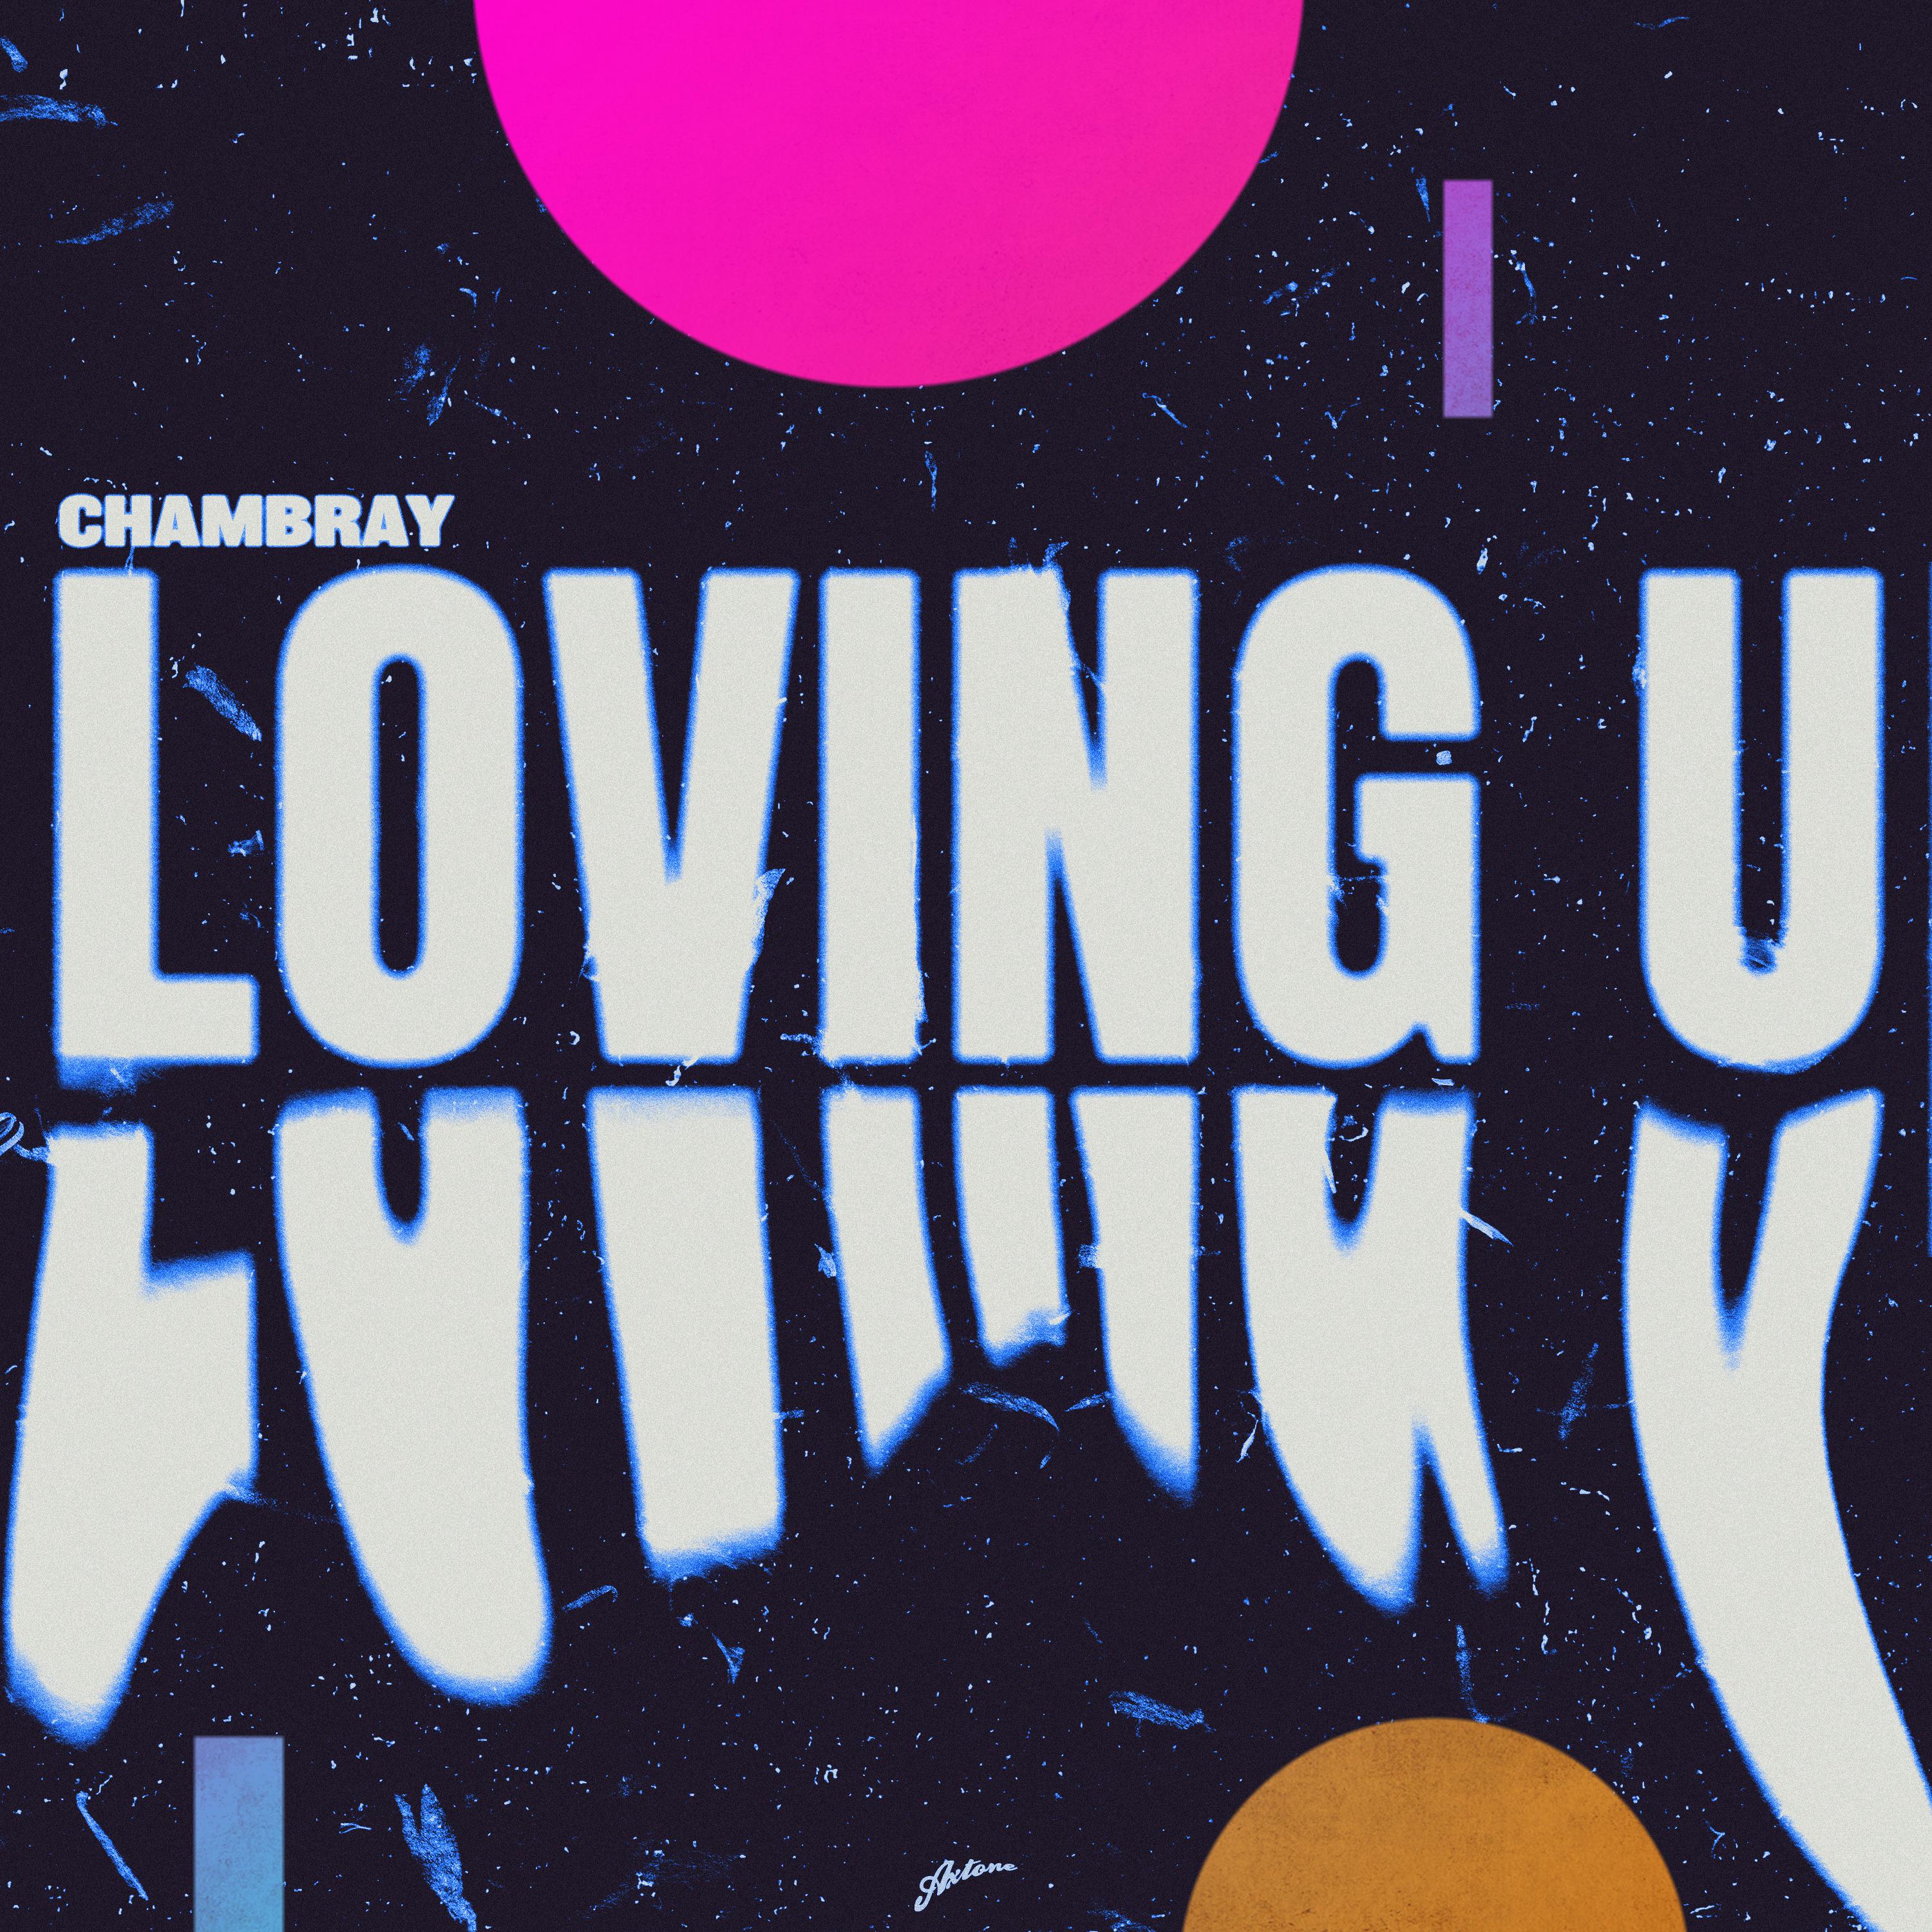 Chambray - LOVING U